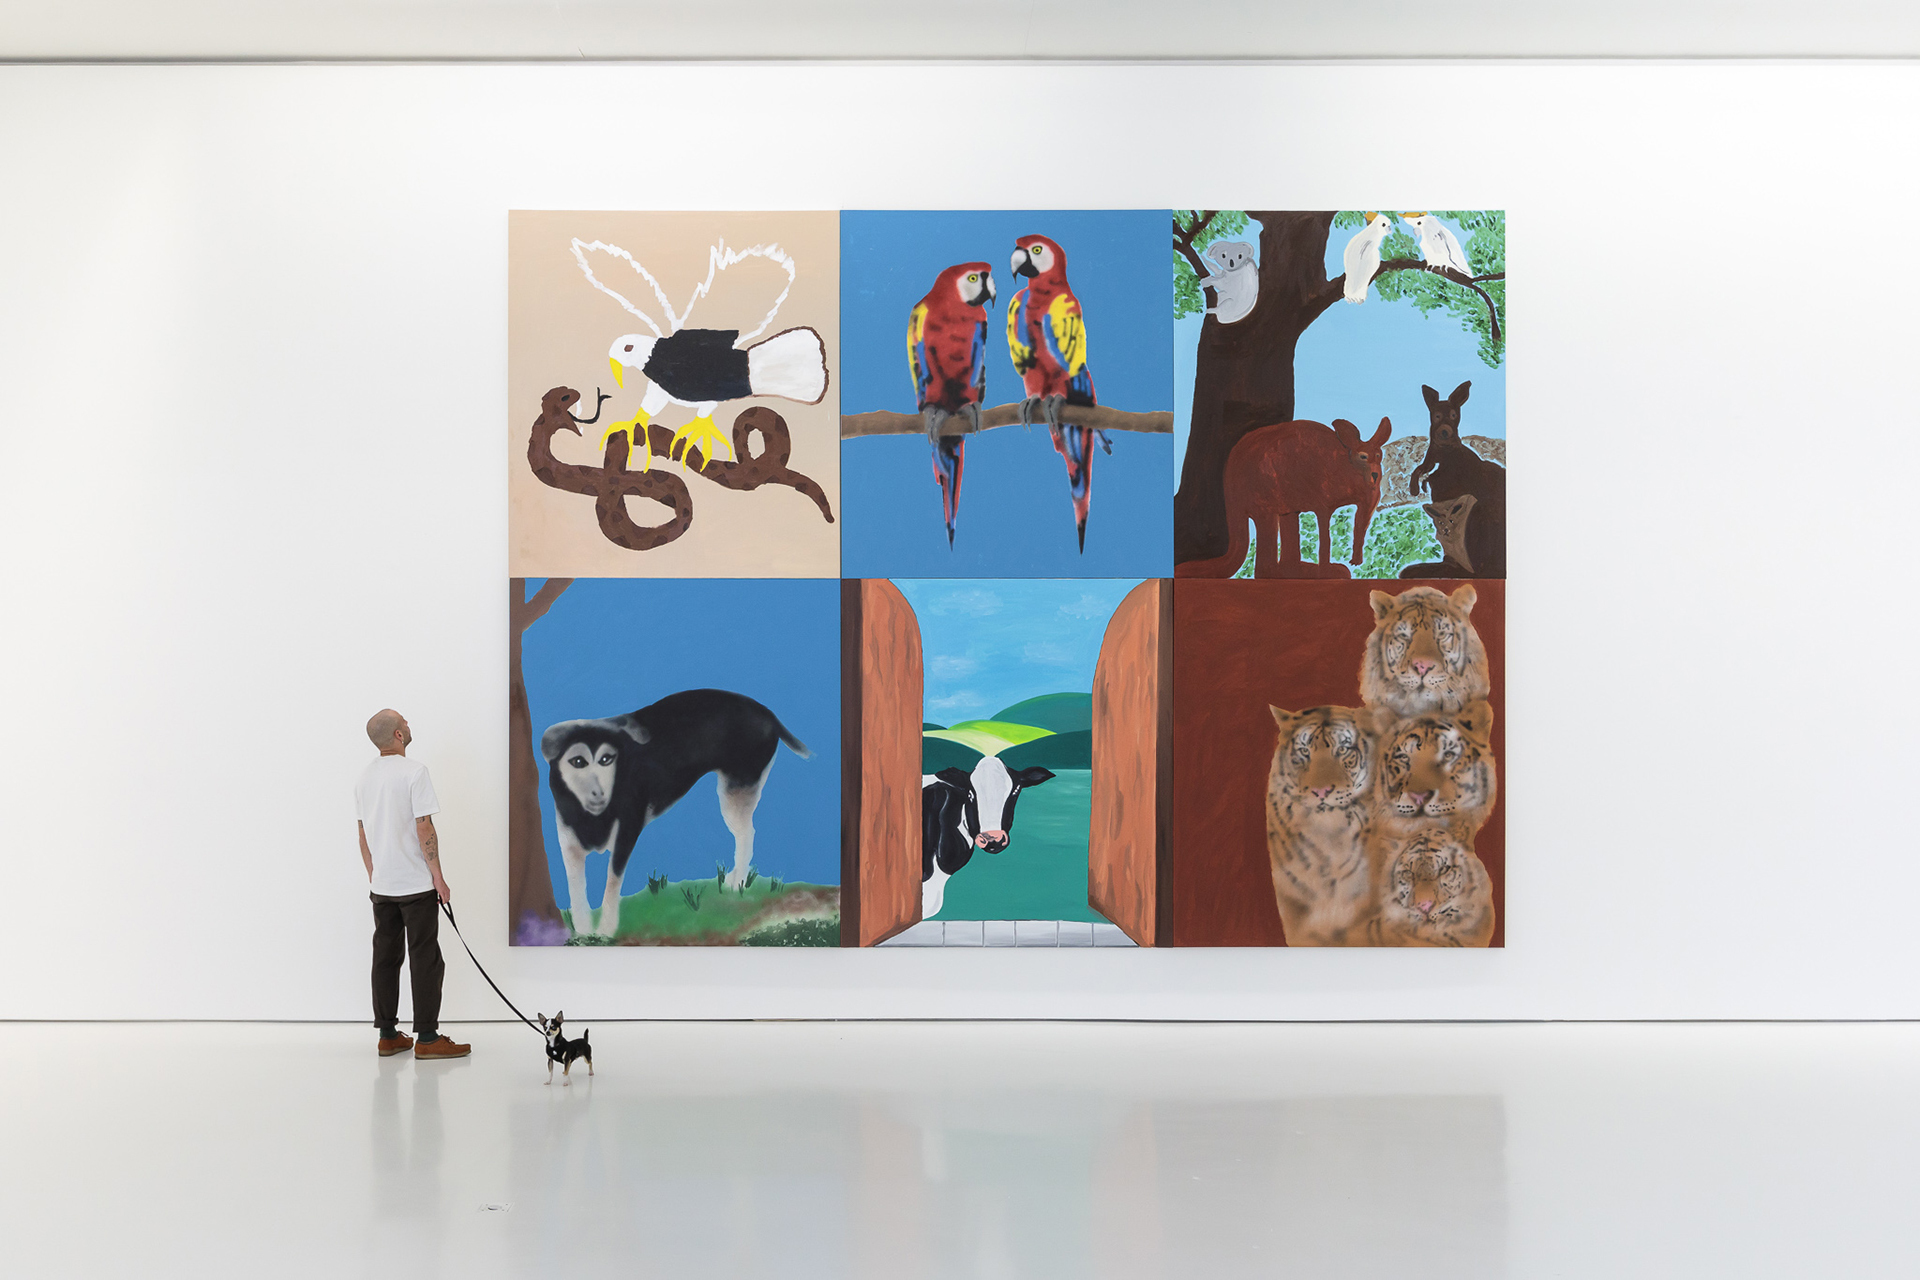 Ricardo Passaporte, Car Wash Animals, 2021, Painting Installation view at Galeria Duarte Sequeira